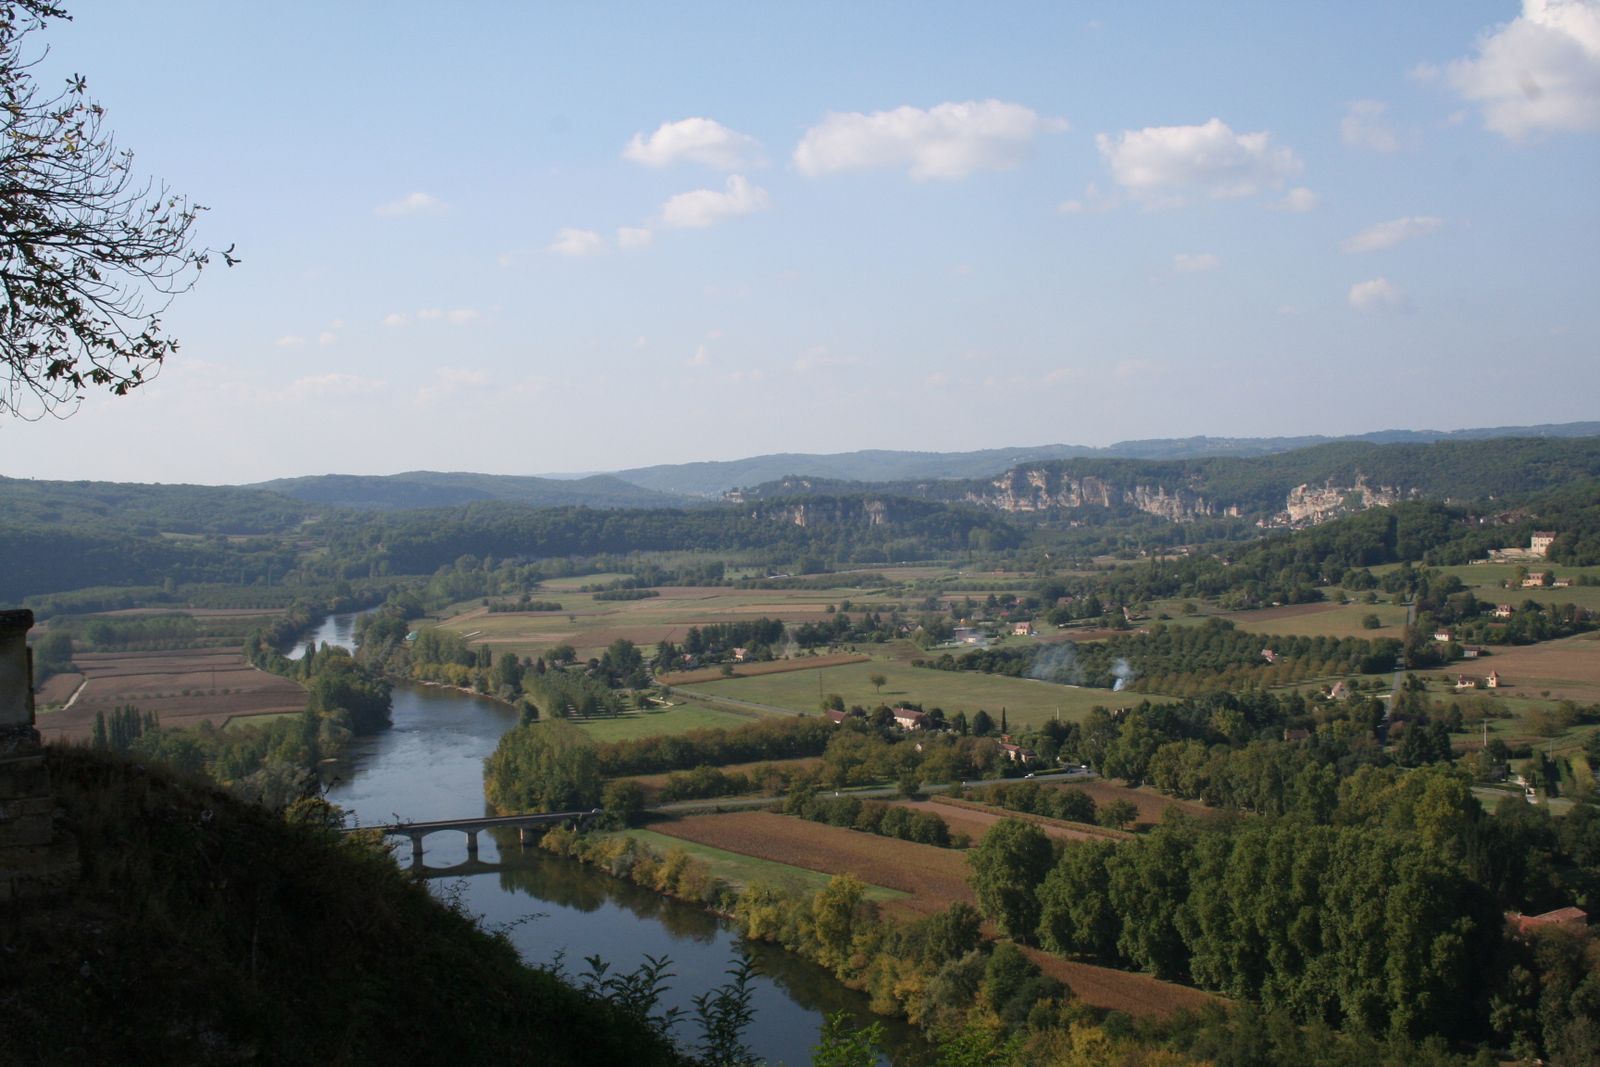 Typical Dordogne Landscape, with the Dordogne River